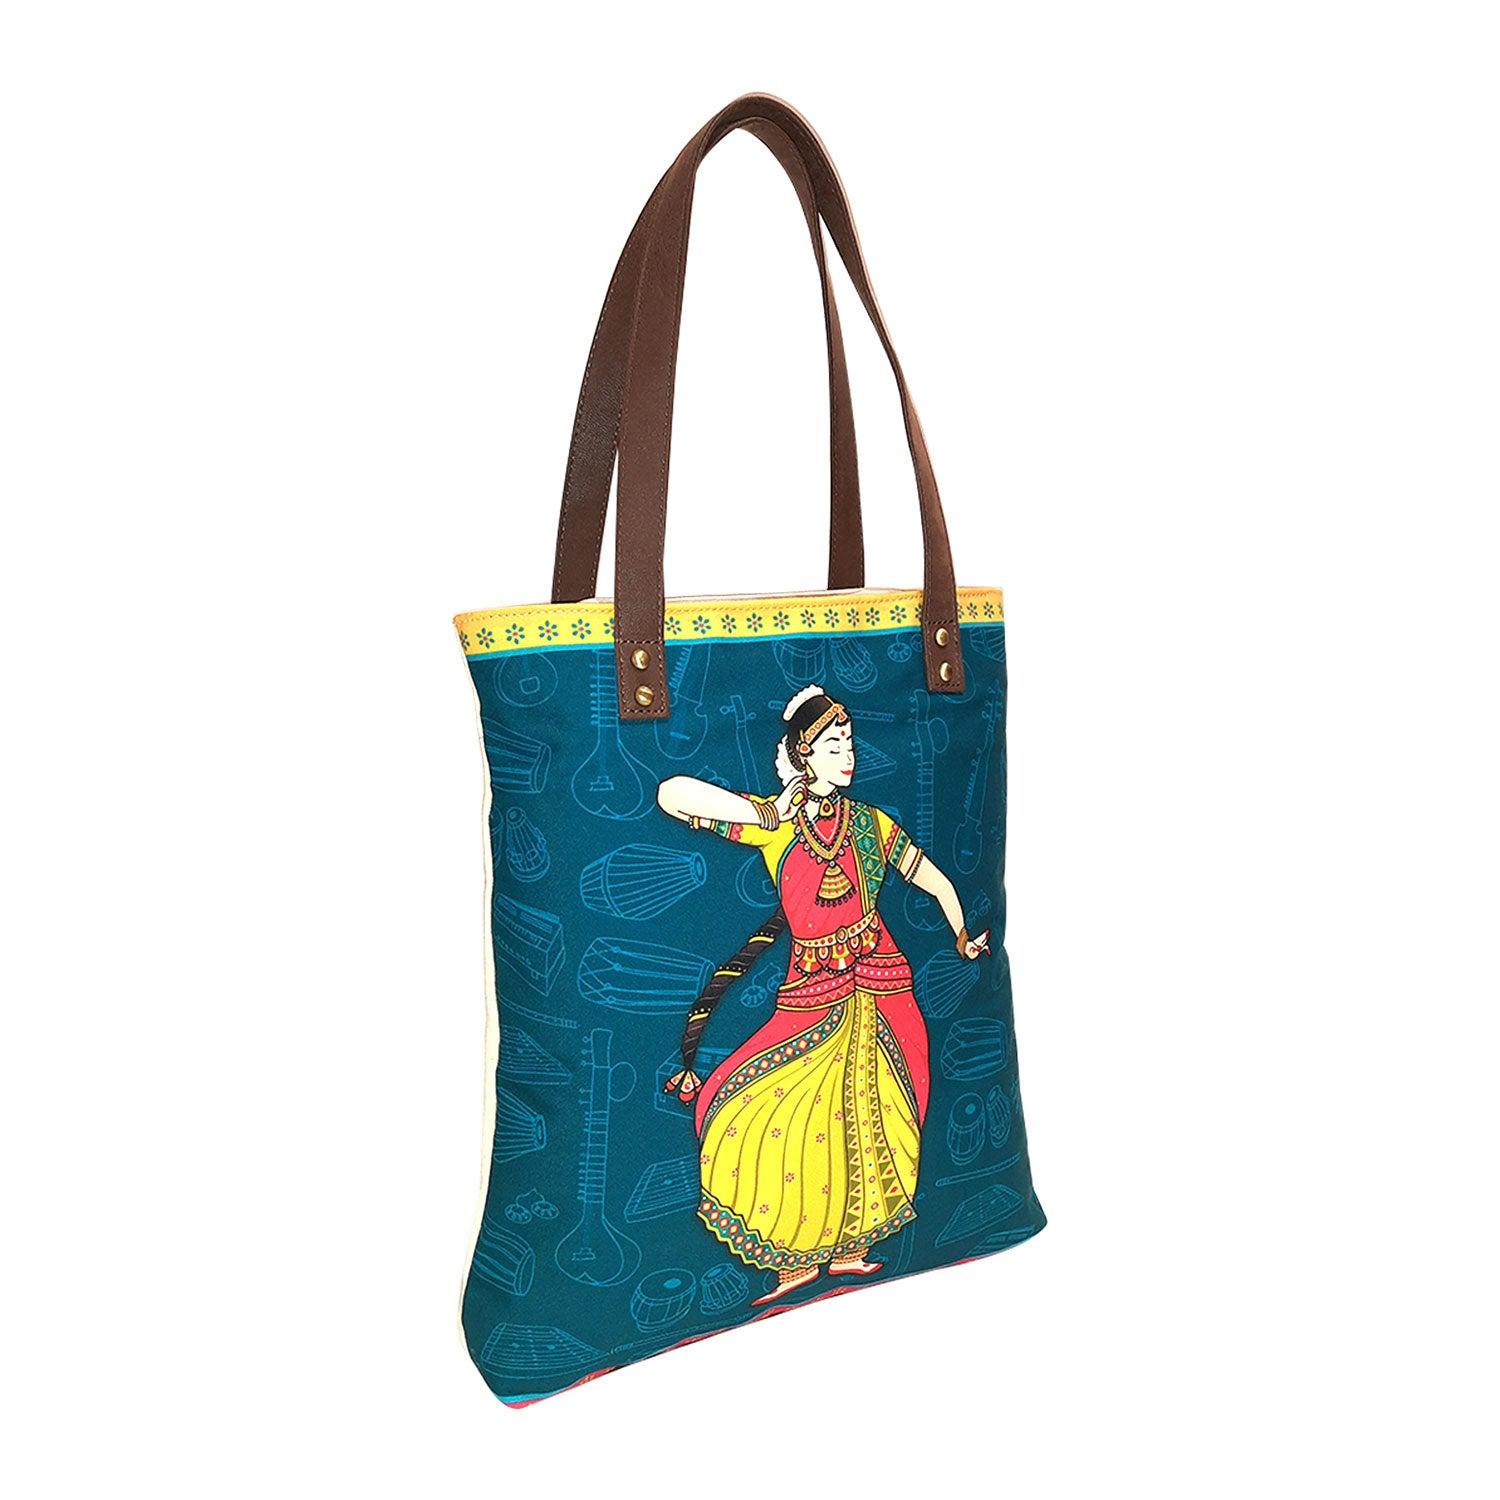 Buy All Things Sundar Women's Cross Body Bag (Multi-2) at Amazon.in